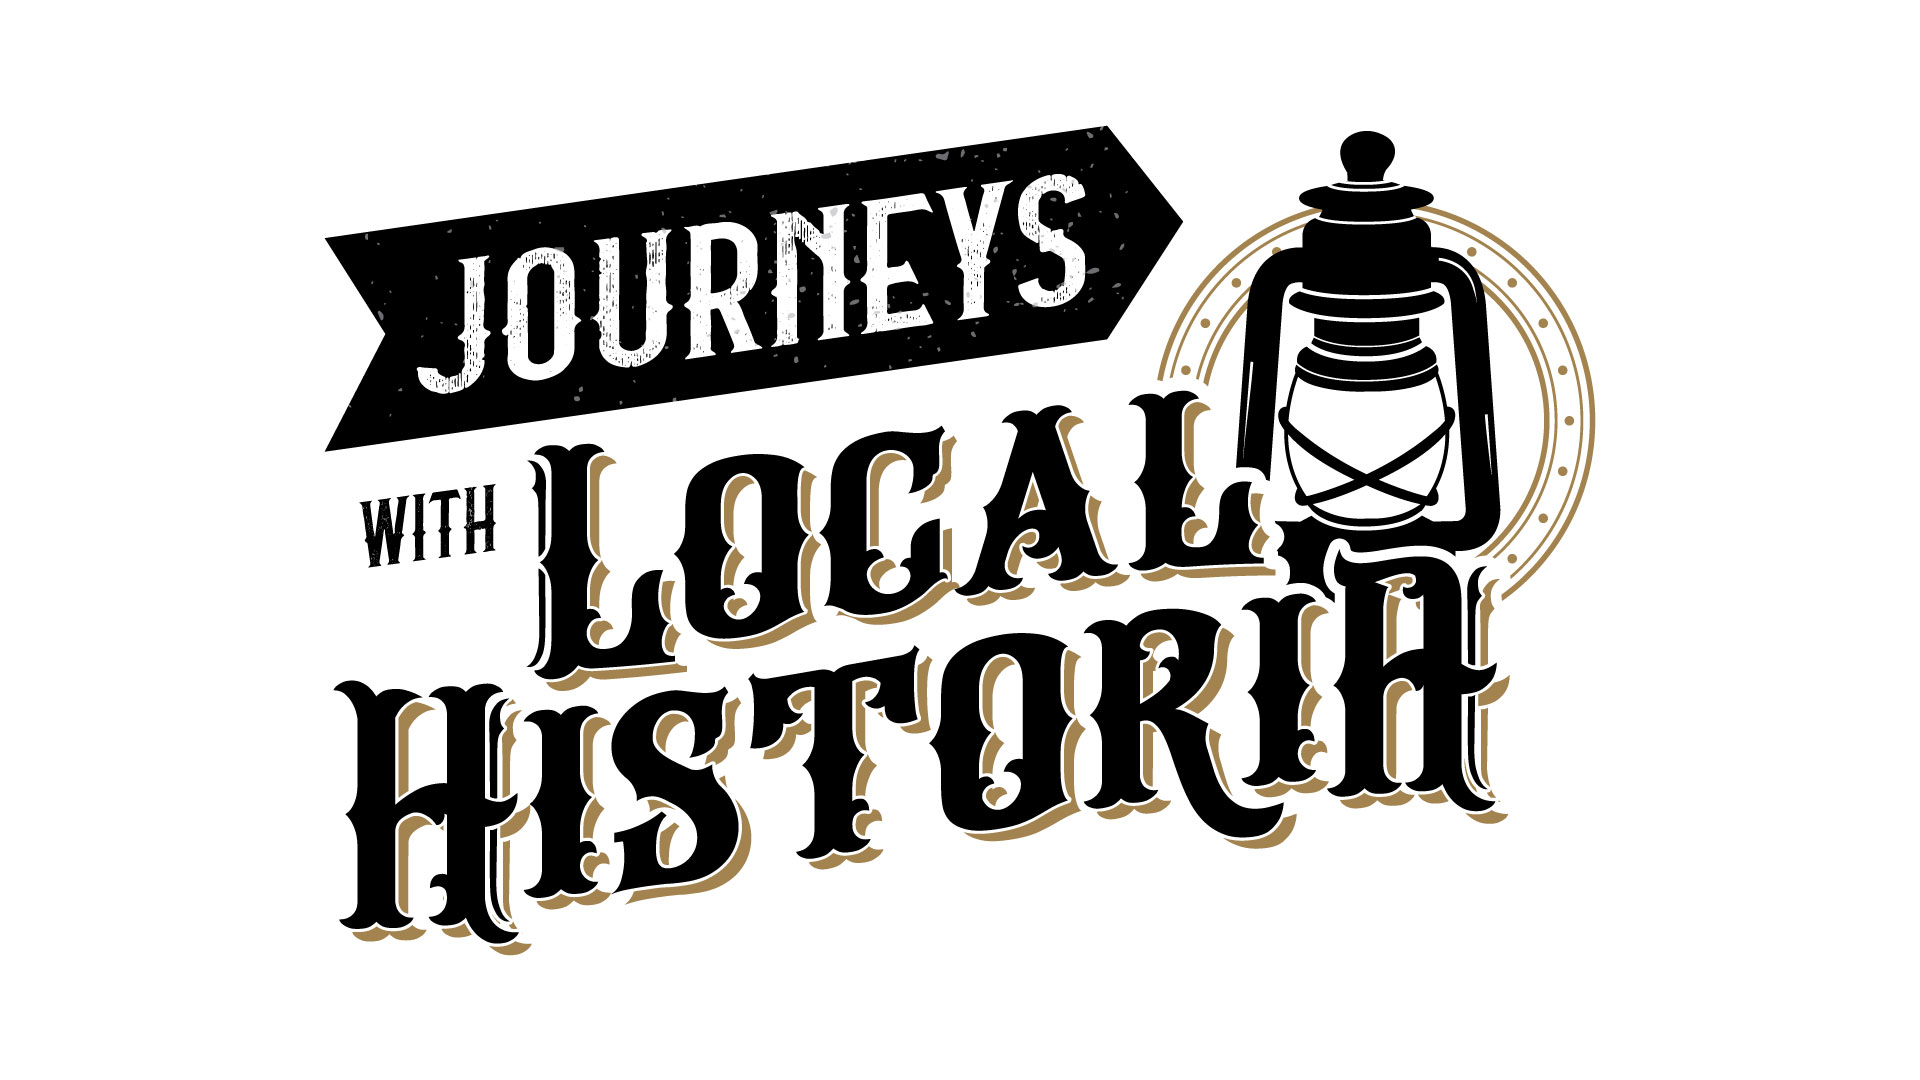 Journeys with Local Historia logo.